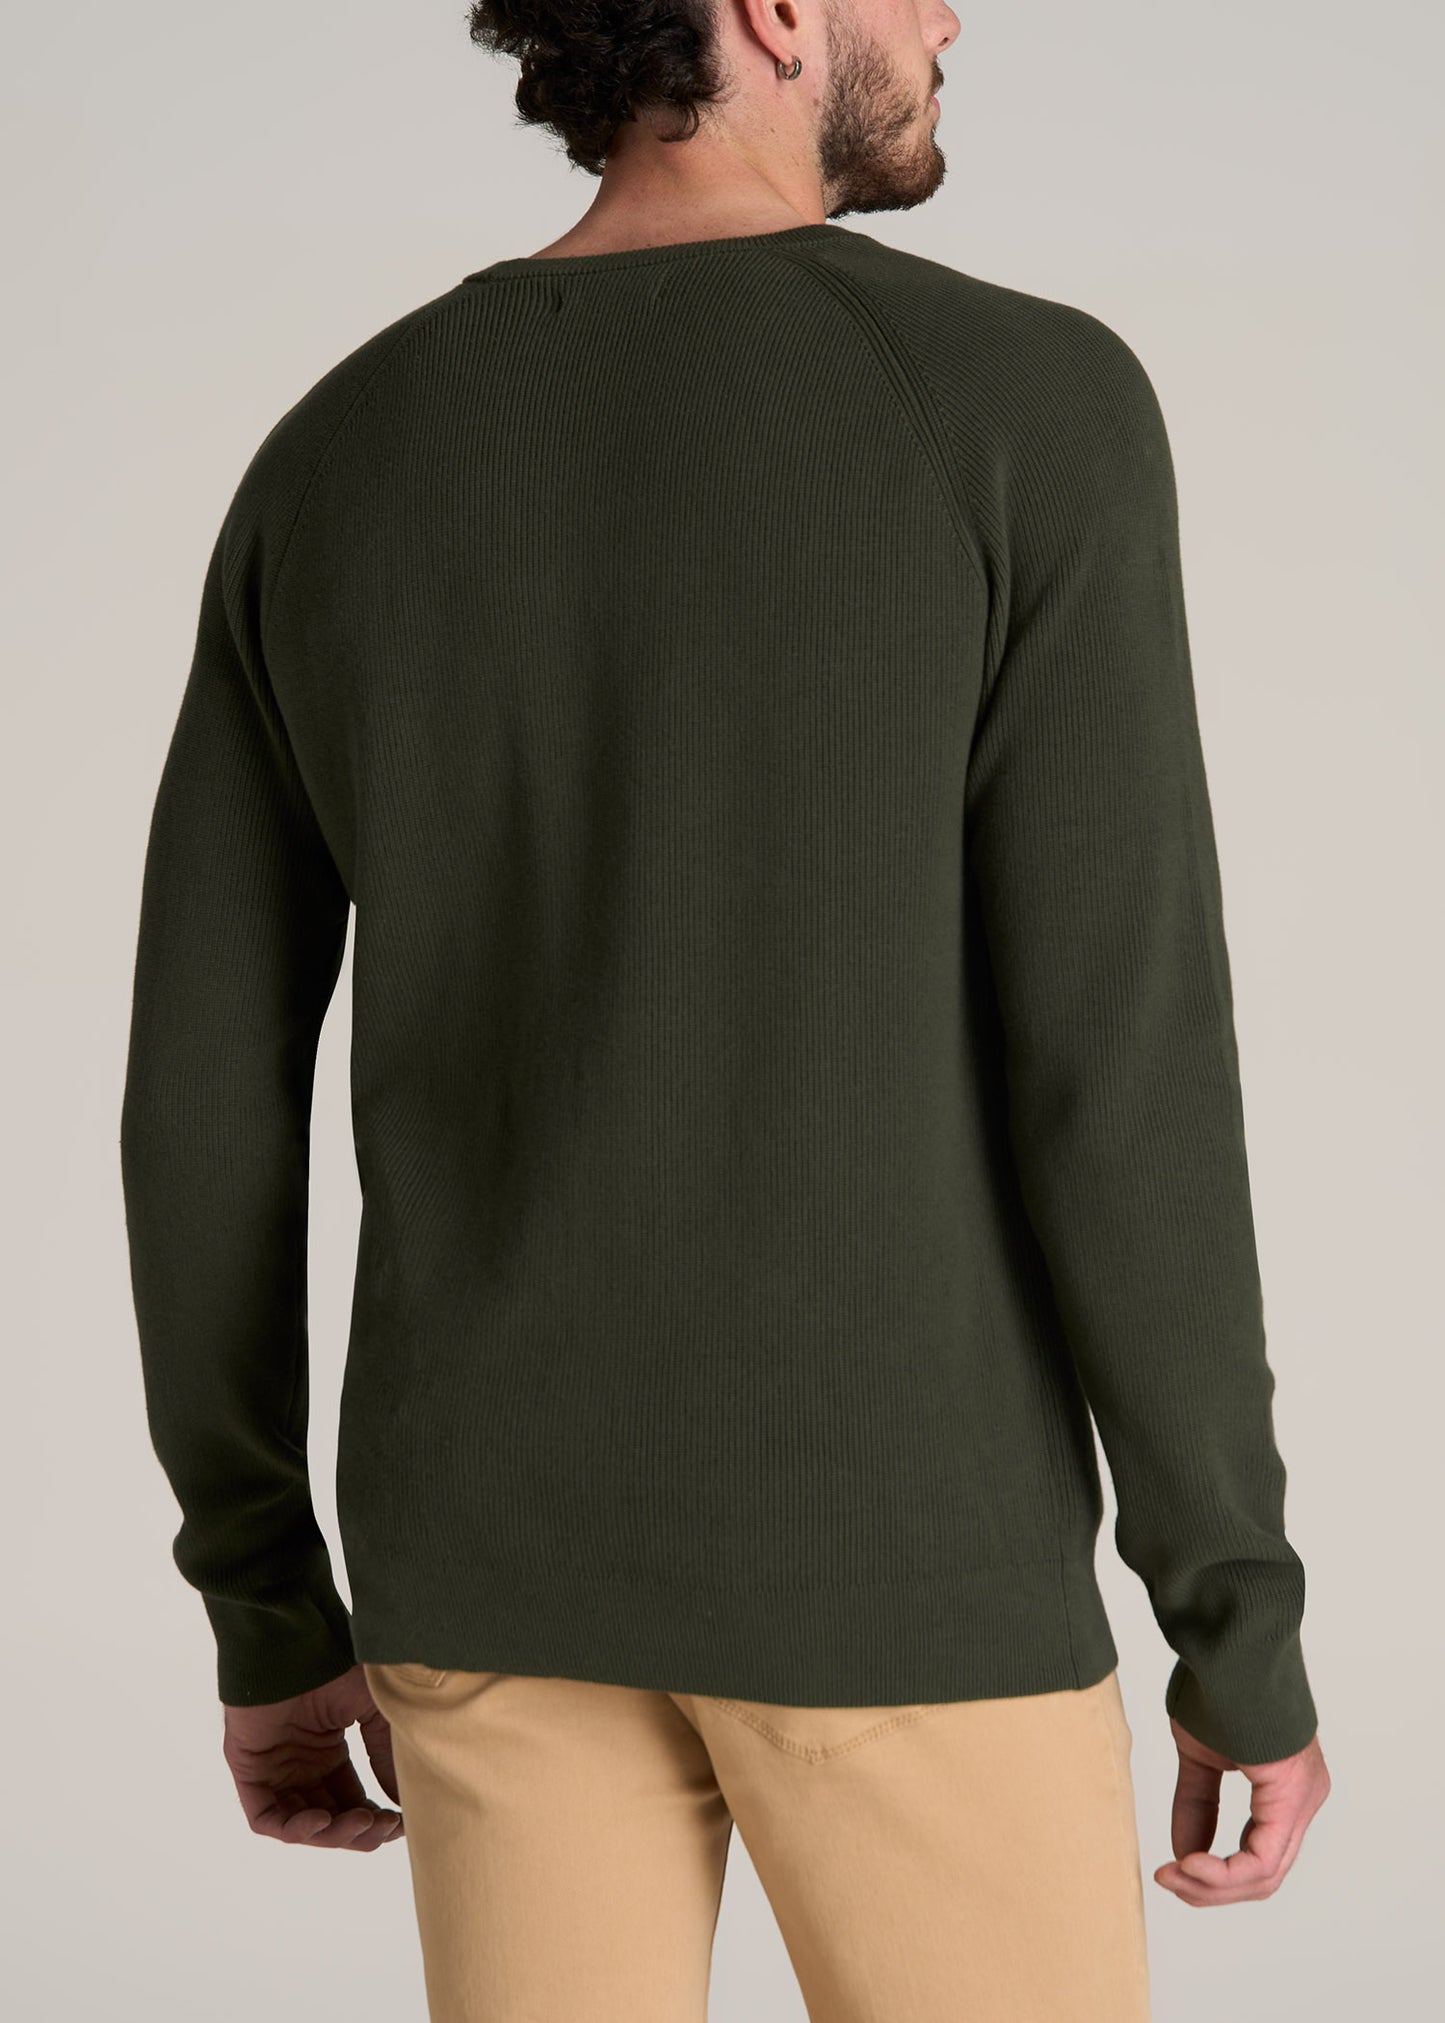 American-Tall-Men-Textured-Knit-Sweater-Dark-Olive-Green-back